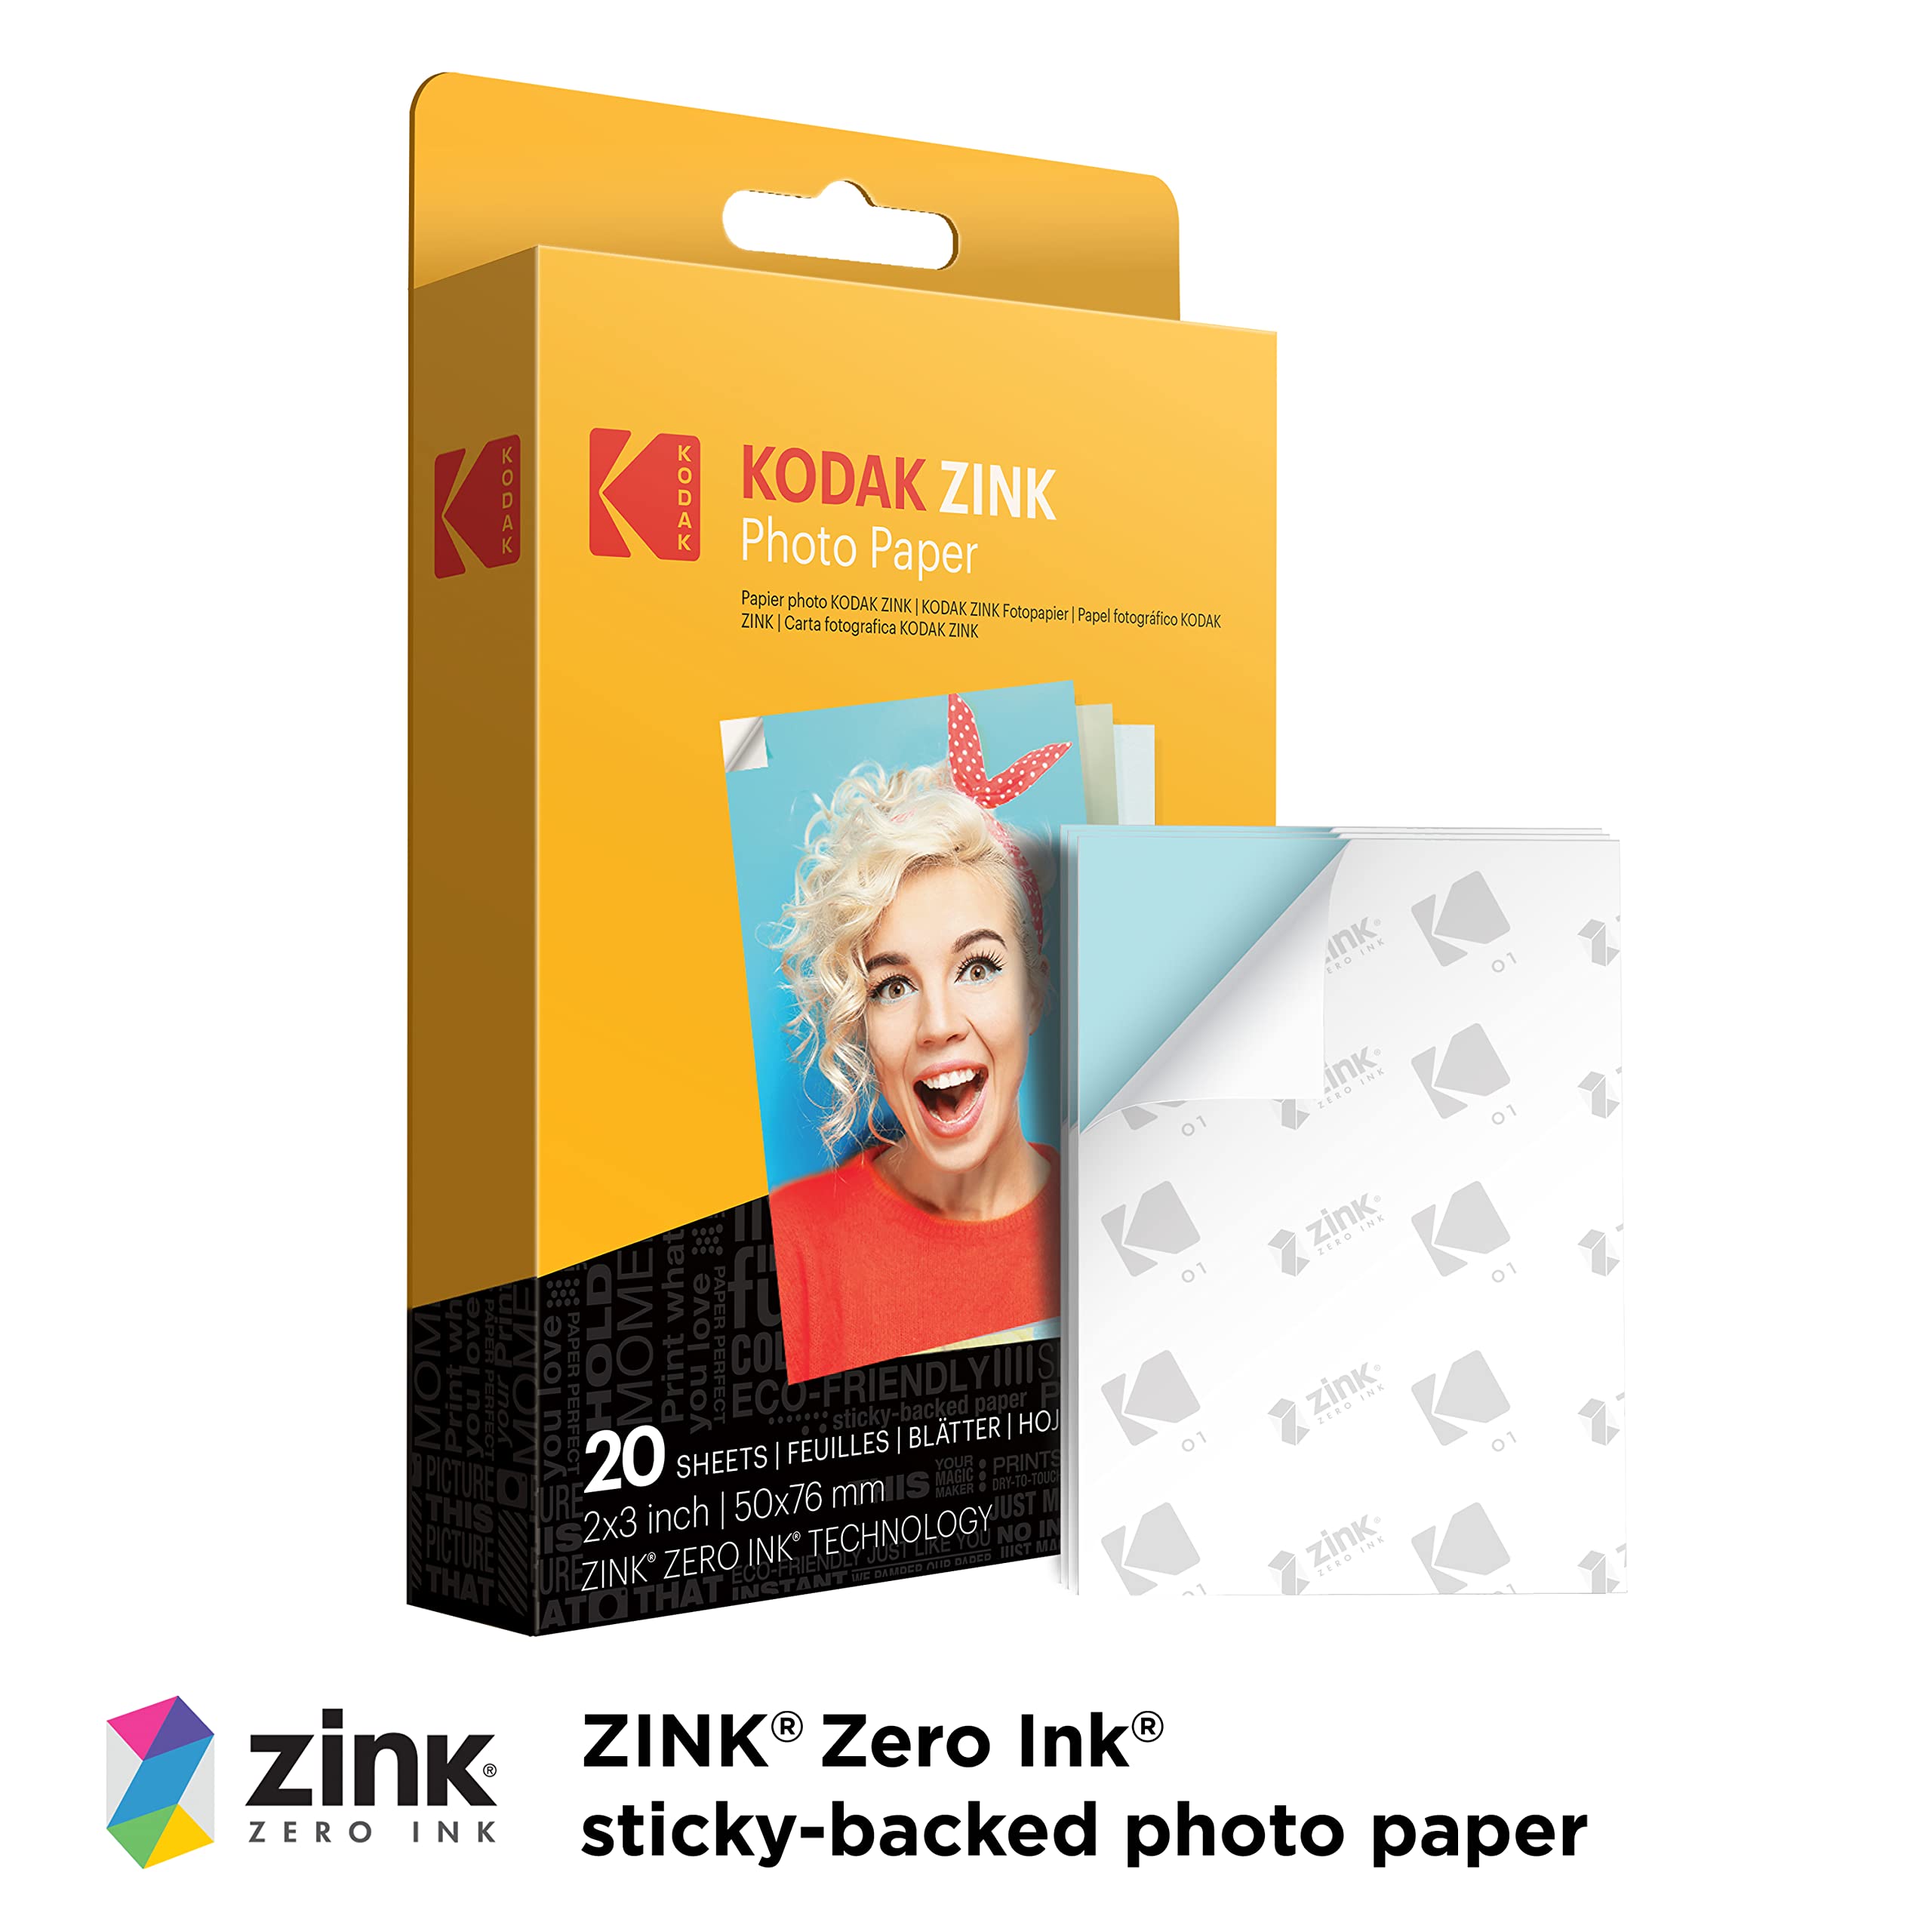 Kodak Printomatic Instant Camera (Grey) Gift Bundle + Zink Paper (20 Sheets) + Deluxe Case + 7 Fun Sticker Sets + Twin Tip Markers + Photo Album.